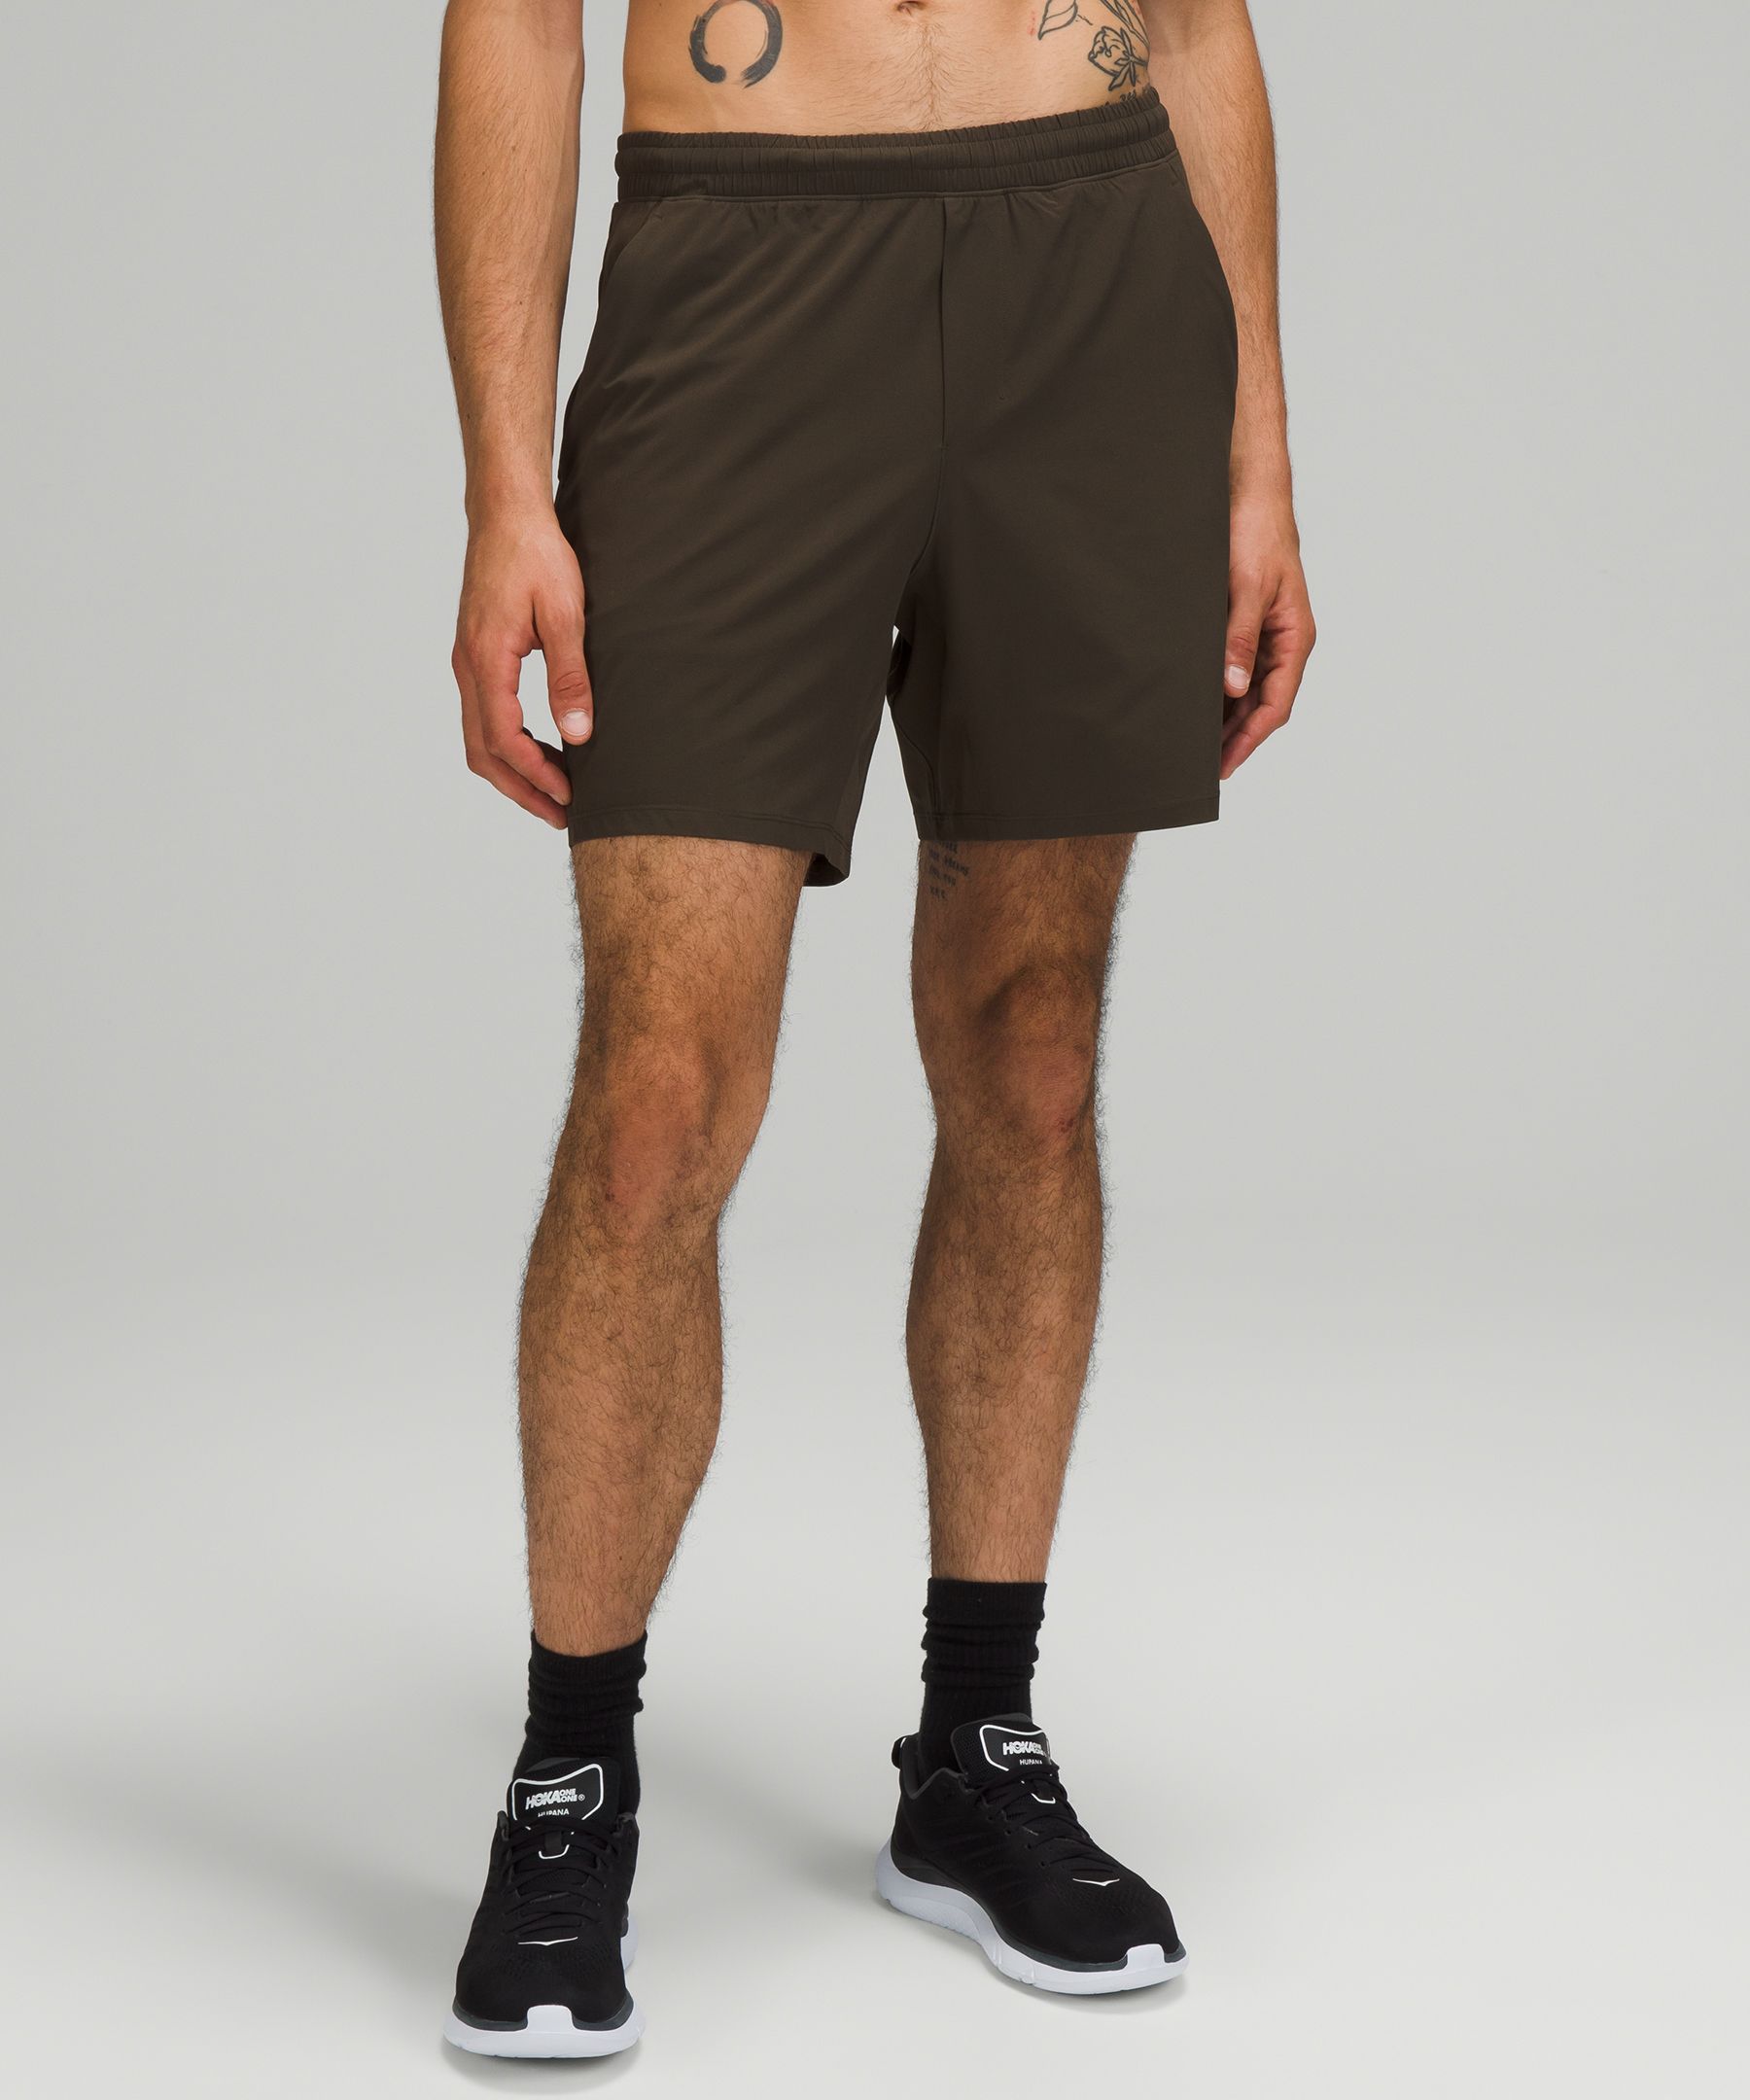 Active OOTD: My Favorite Shorts, Men's 4” Surge Shorts, details inside : r/ lululemon